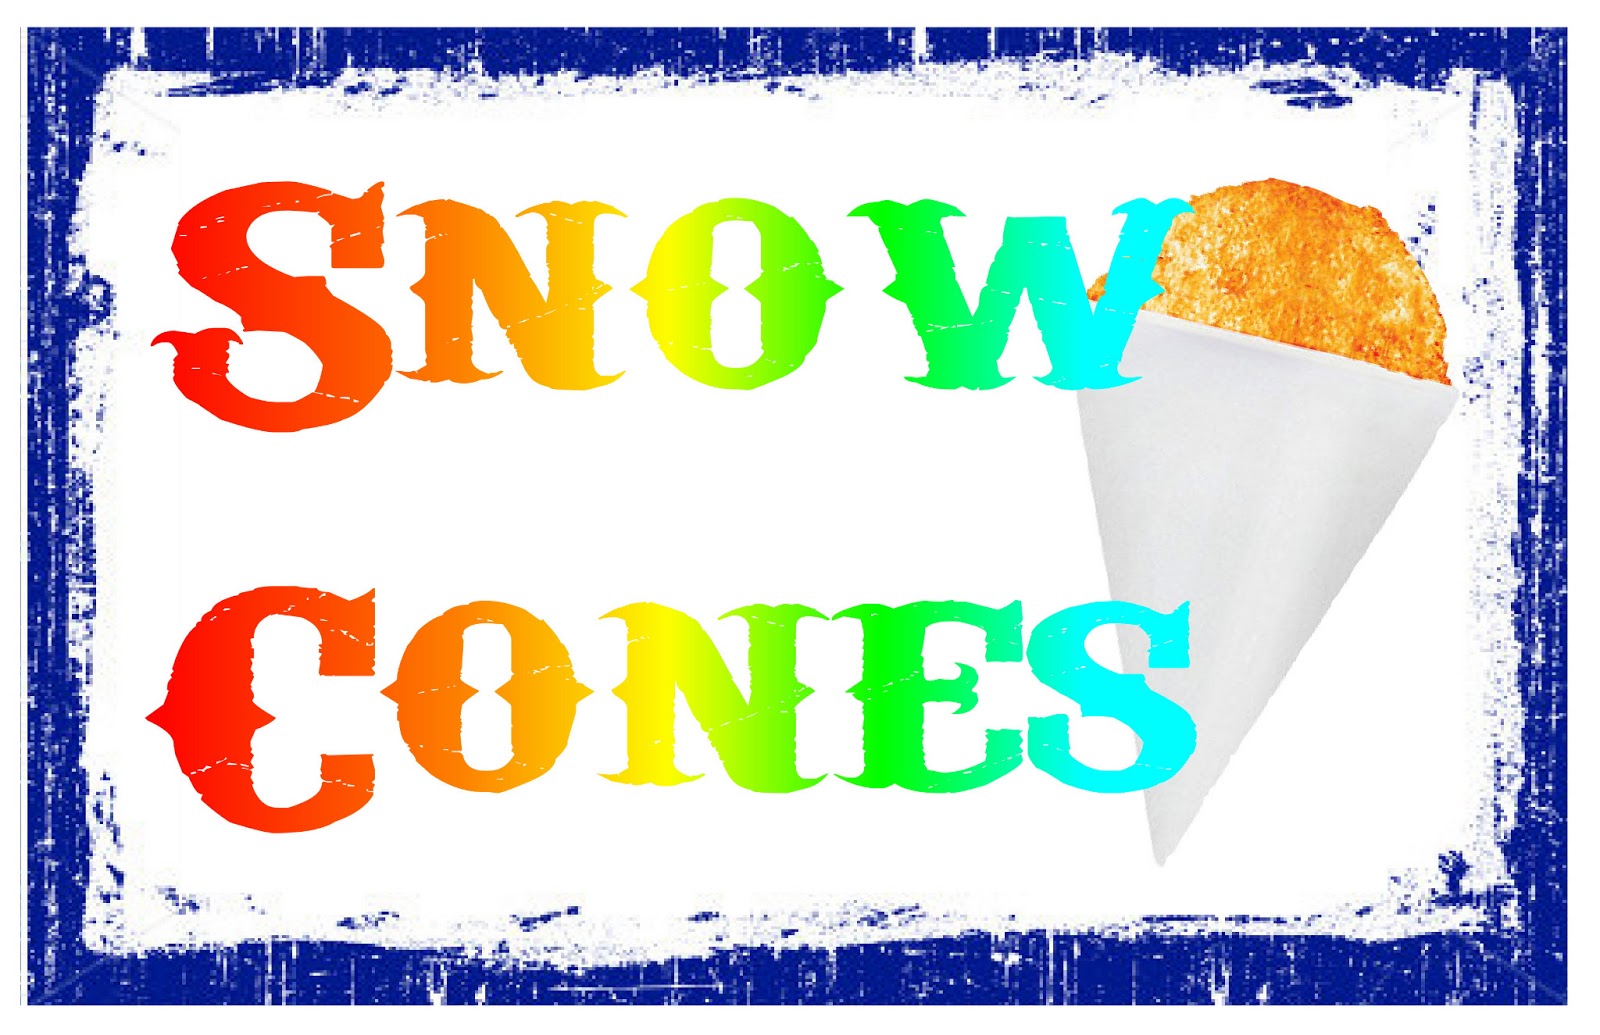 free clipart of snow cones - photo #38